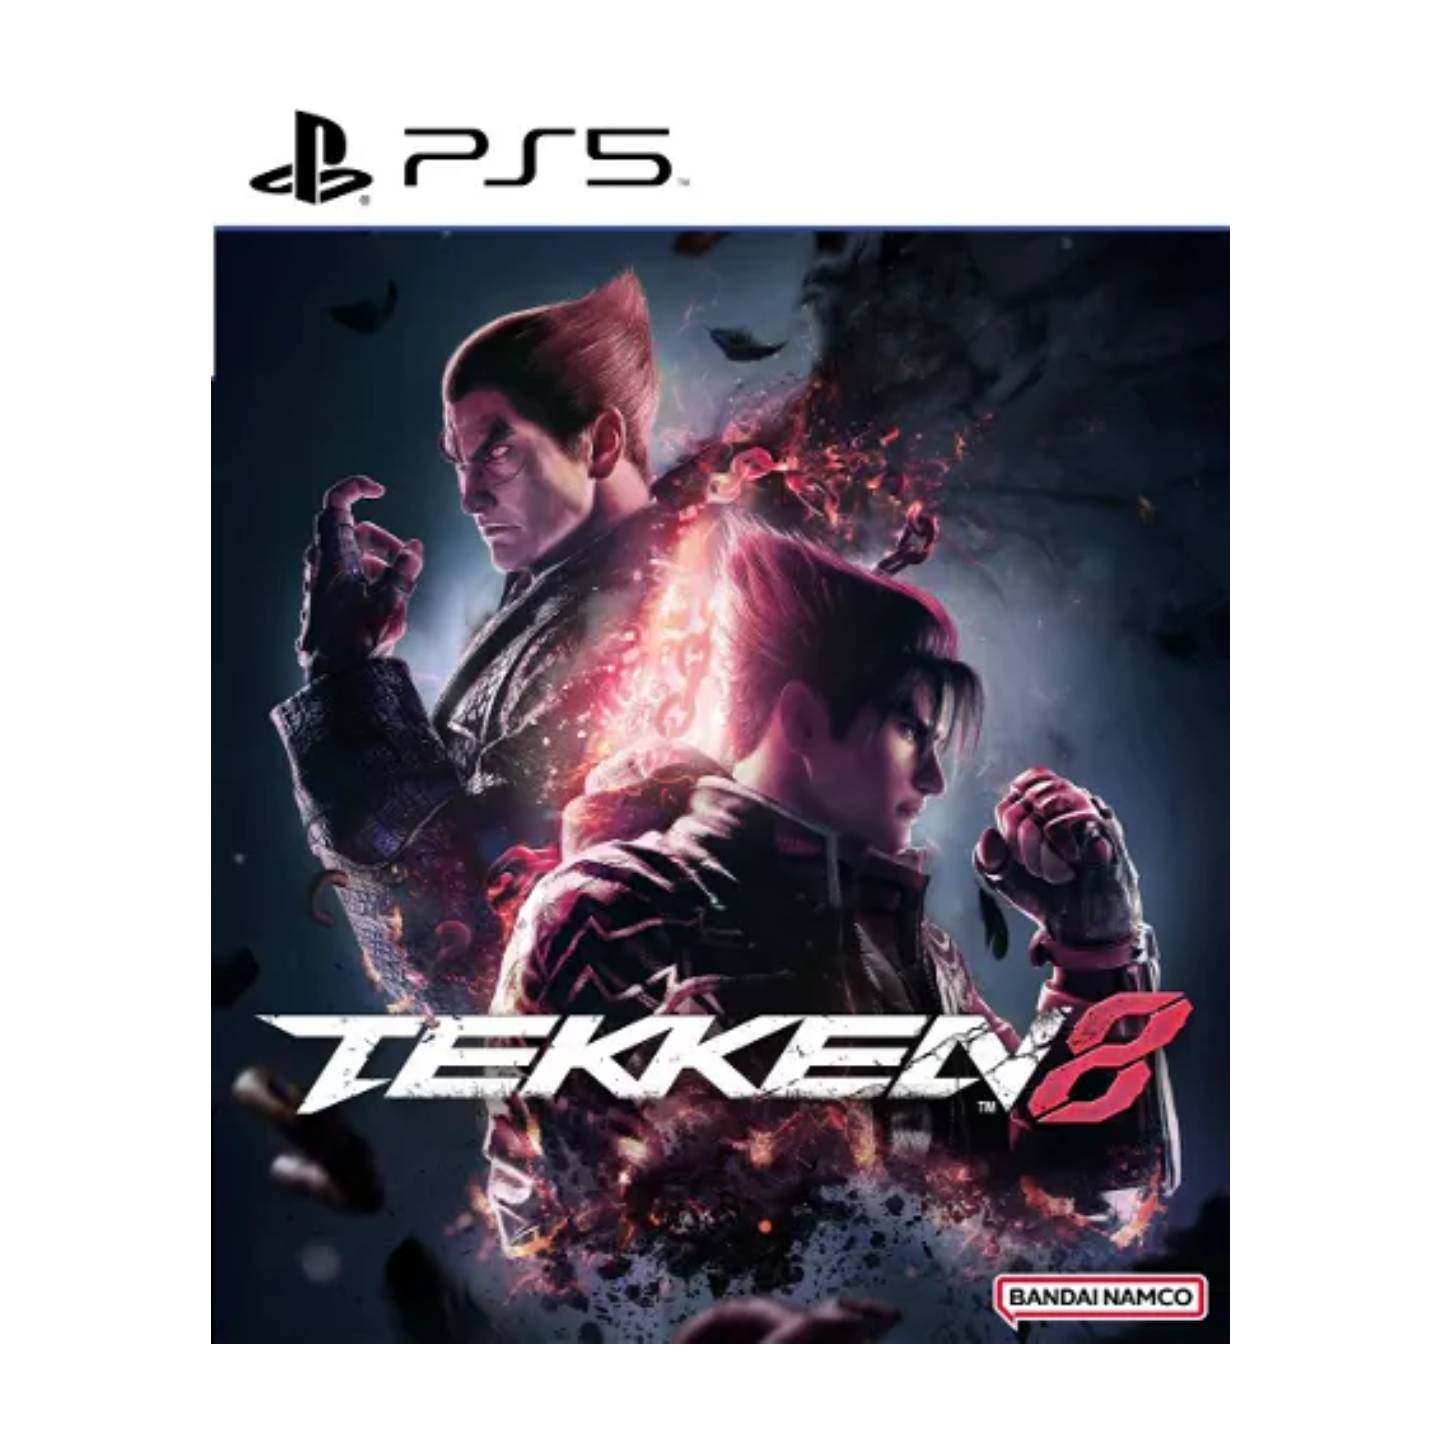 Tekken 8 will arrive for PS5, Xbox Series X